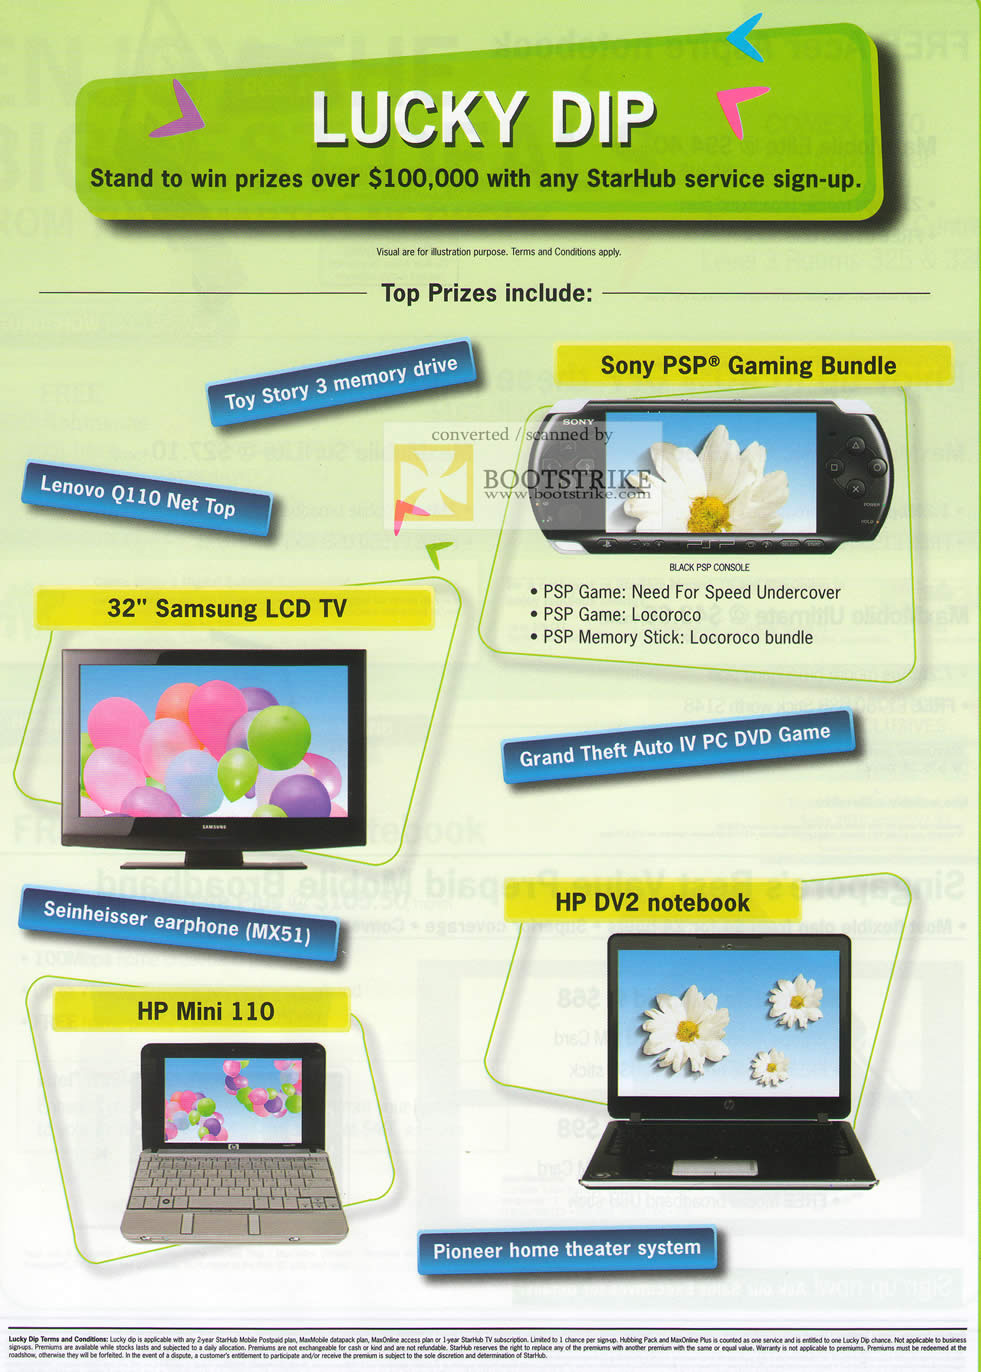 Comex 2010 price list image brochure of Starhub Lucky Dip Prizes Sony PSP Samsung LCD TV HP DV2 Mini 110 Pioneer Home Theater